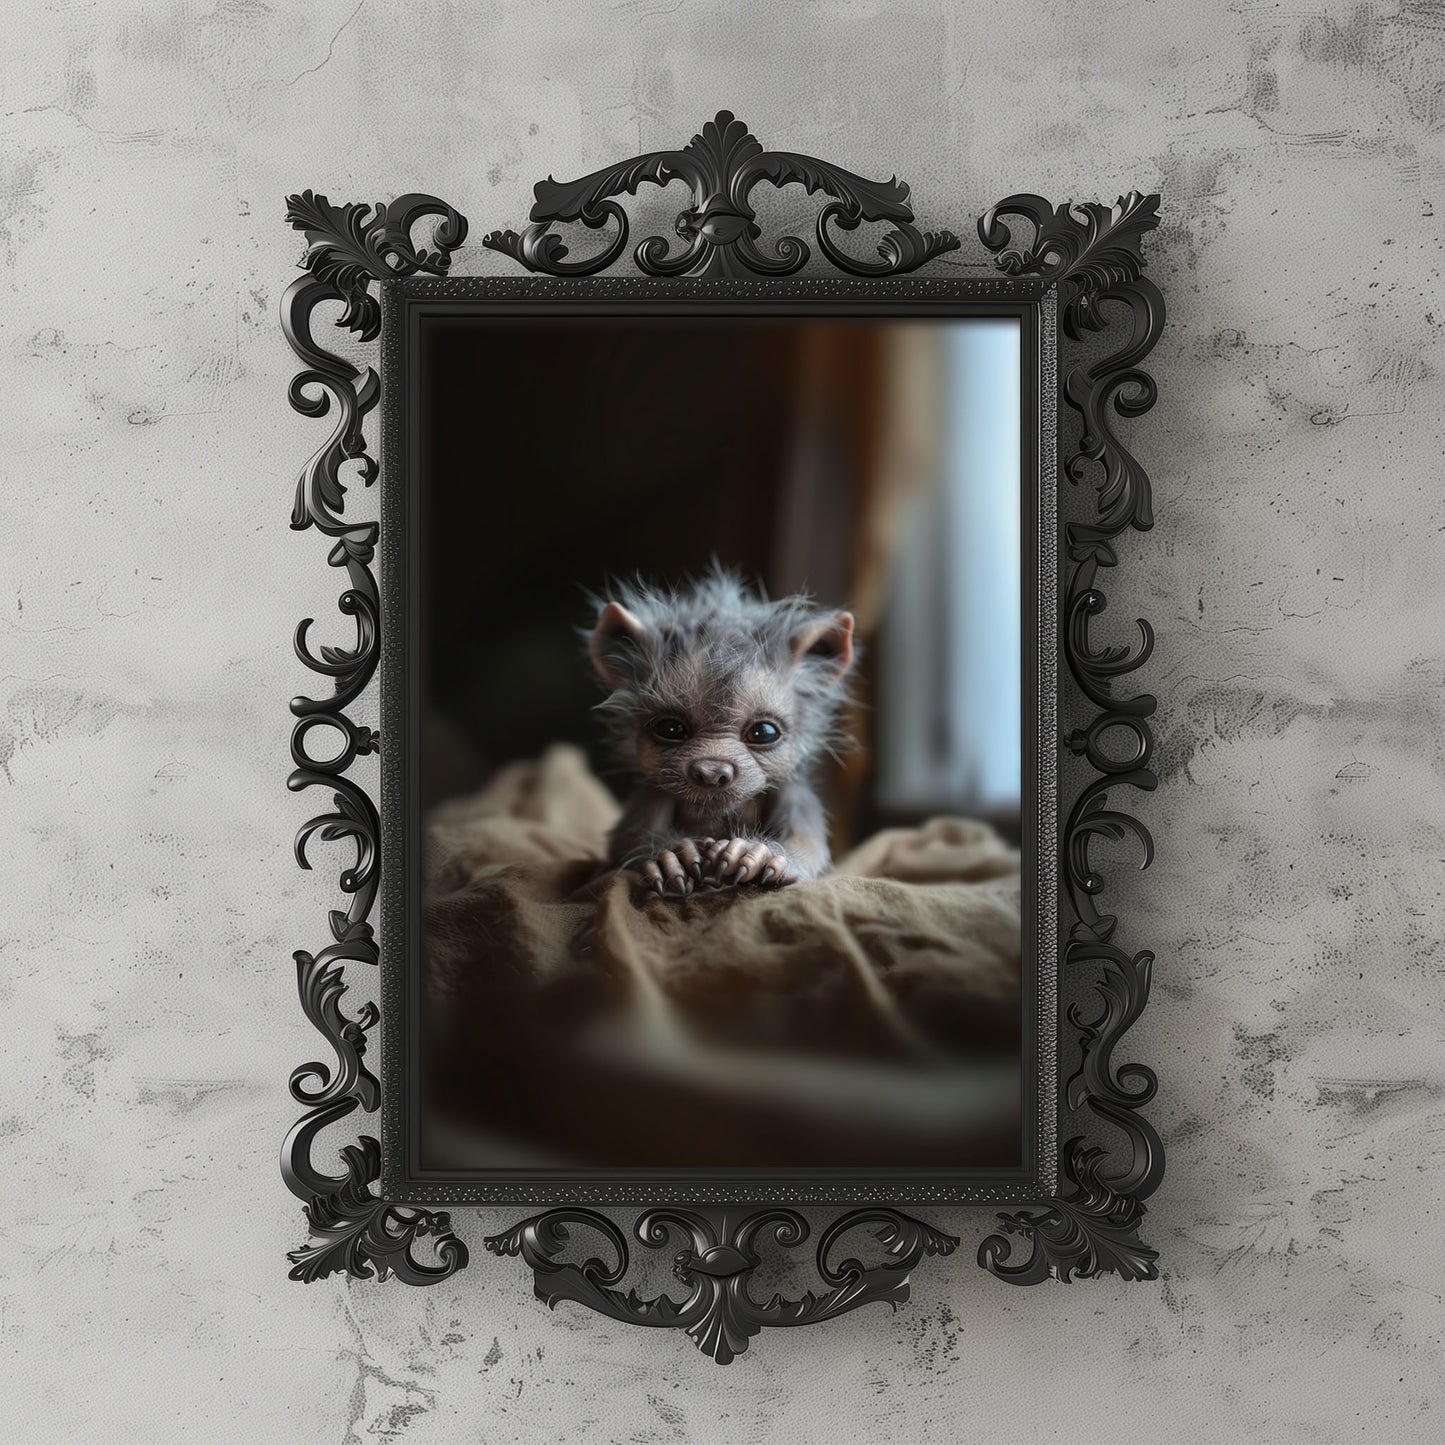 Baby Werewolf Just Woke Up Poster - Gothic Creepy Cute Wall Art